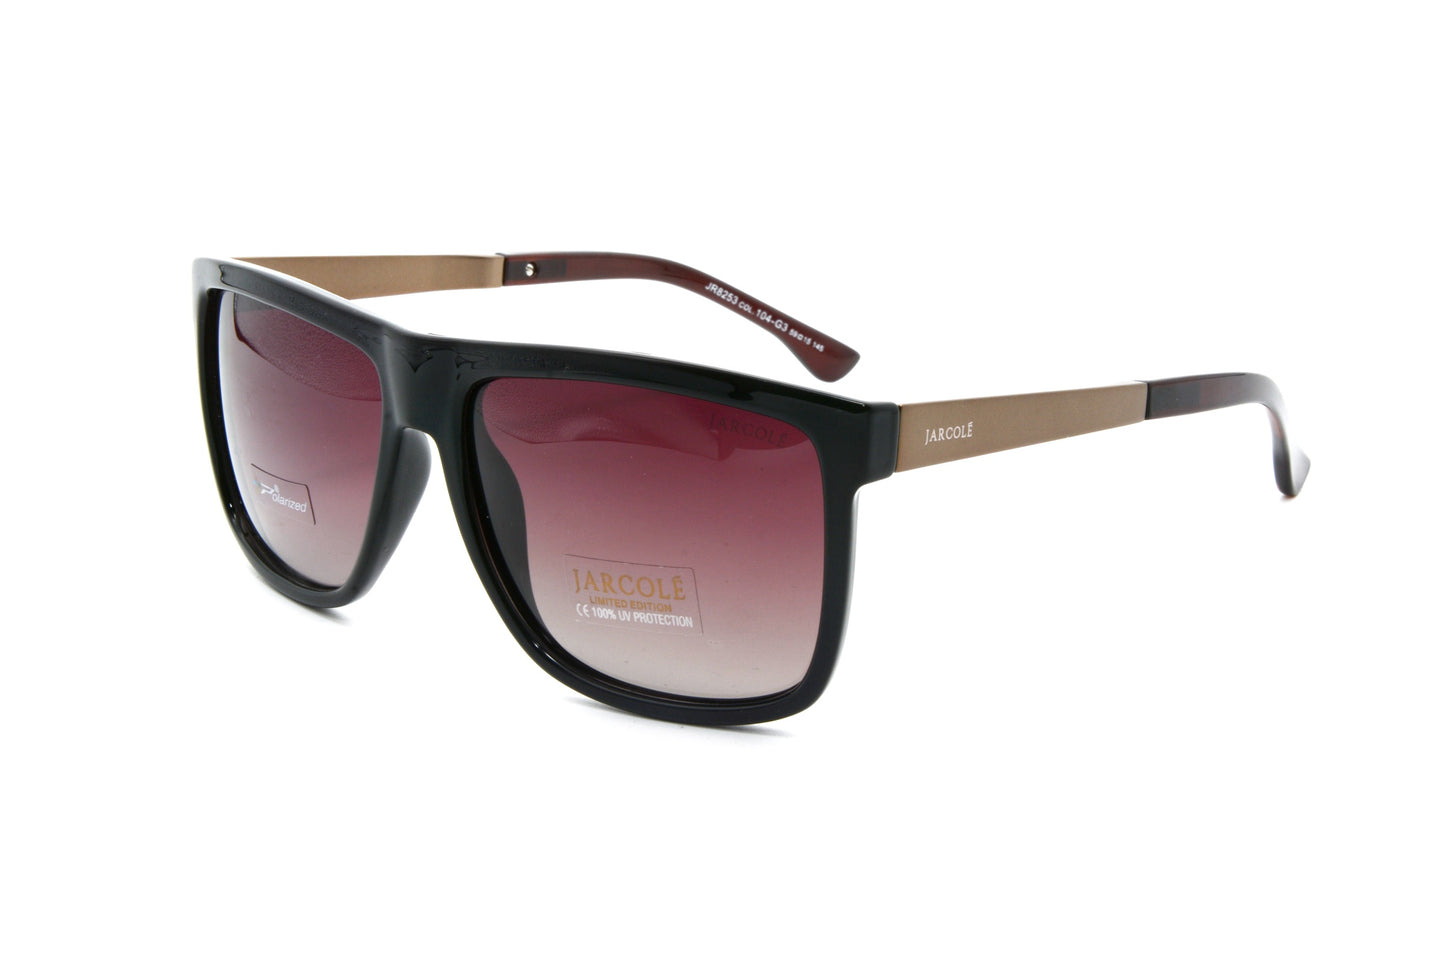 Jarcole sunglasses 8253 104-G3